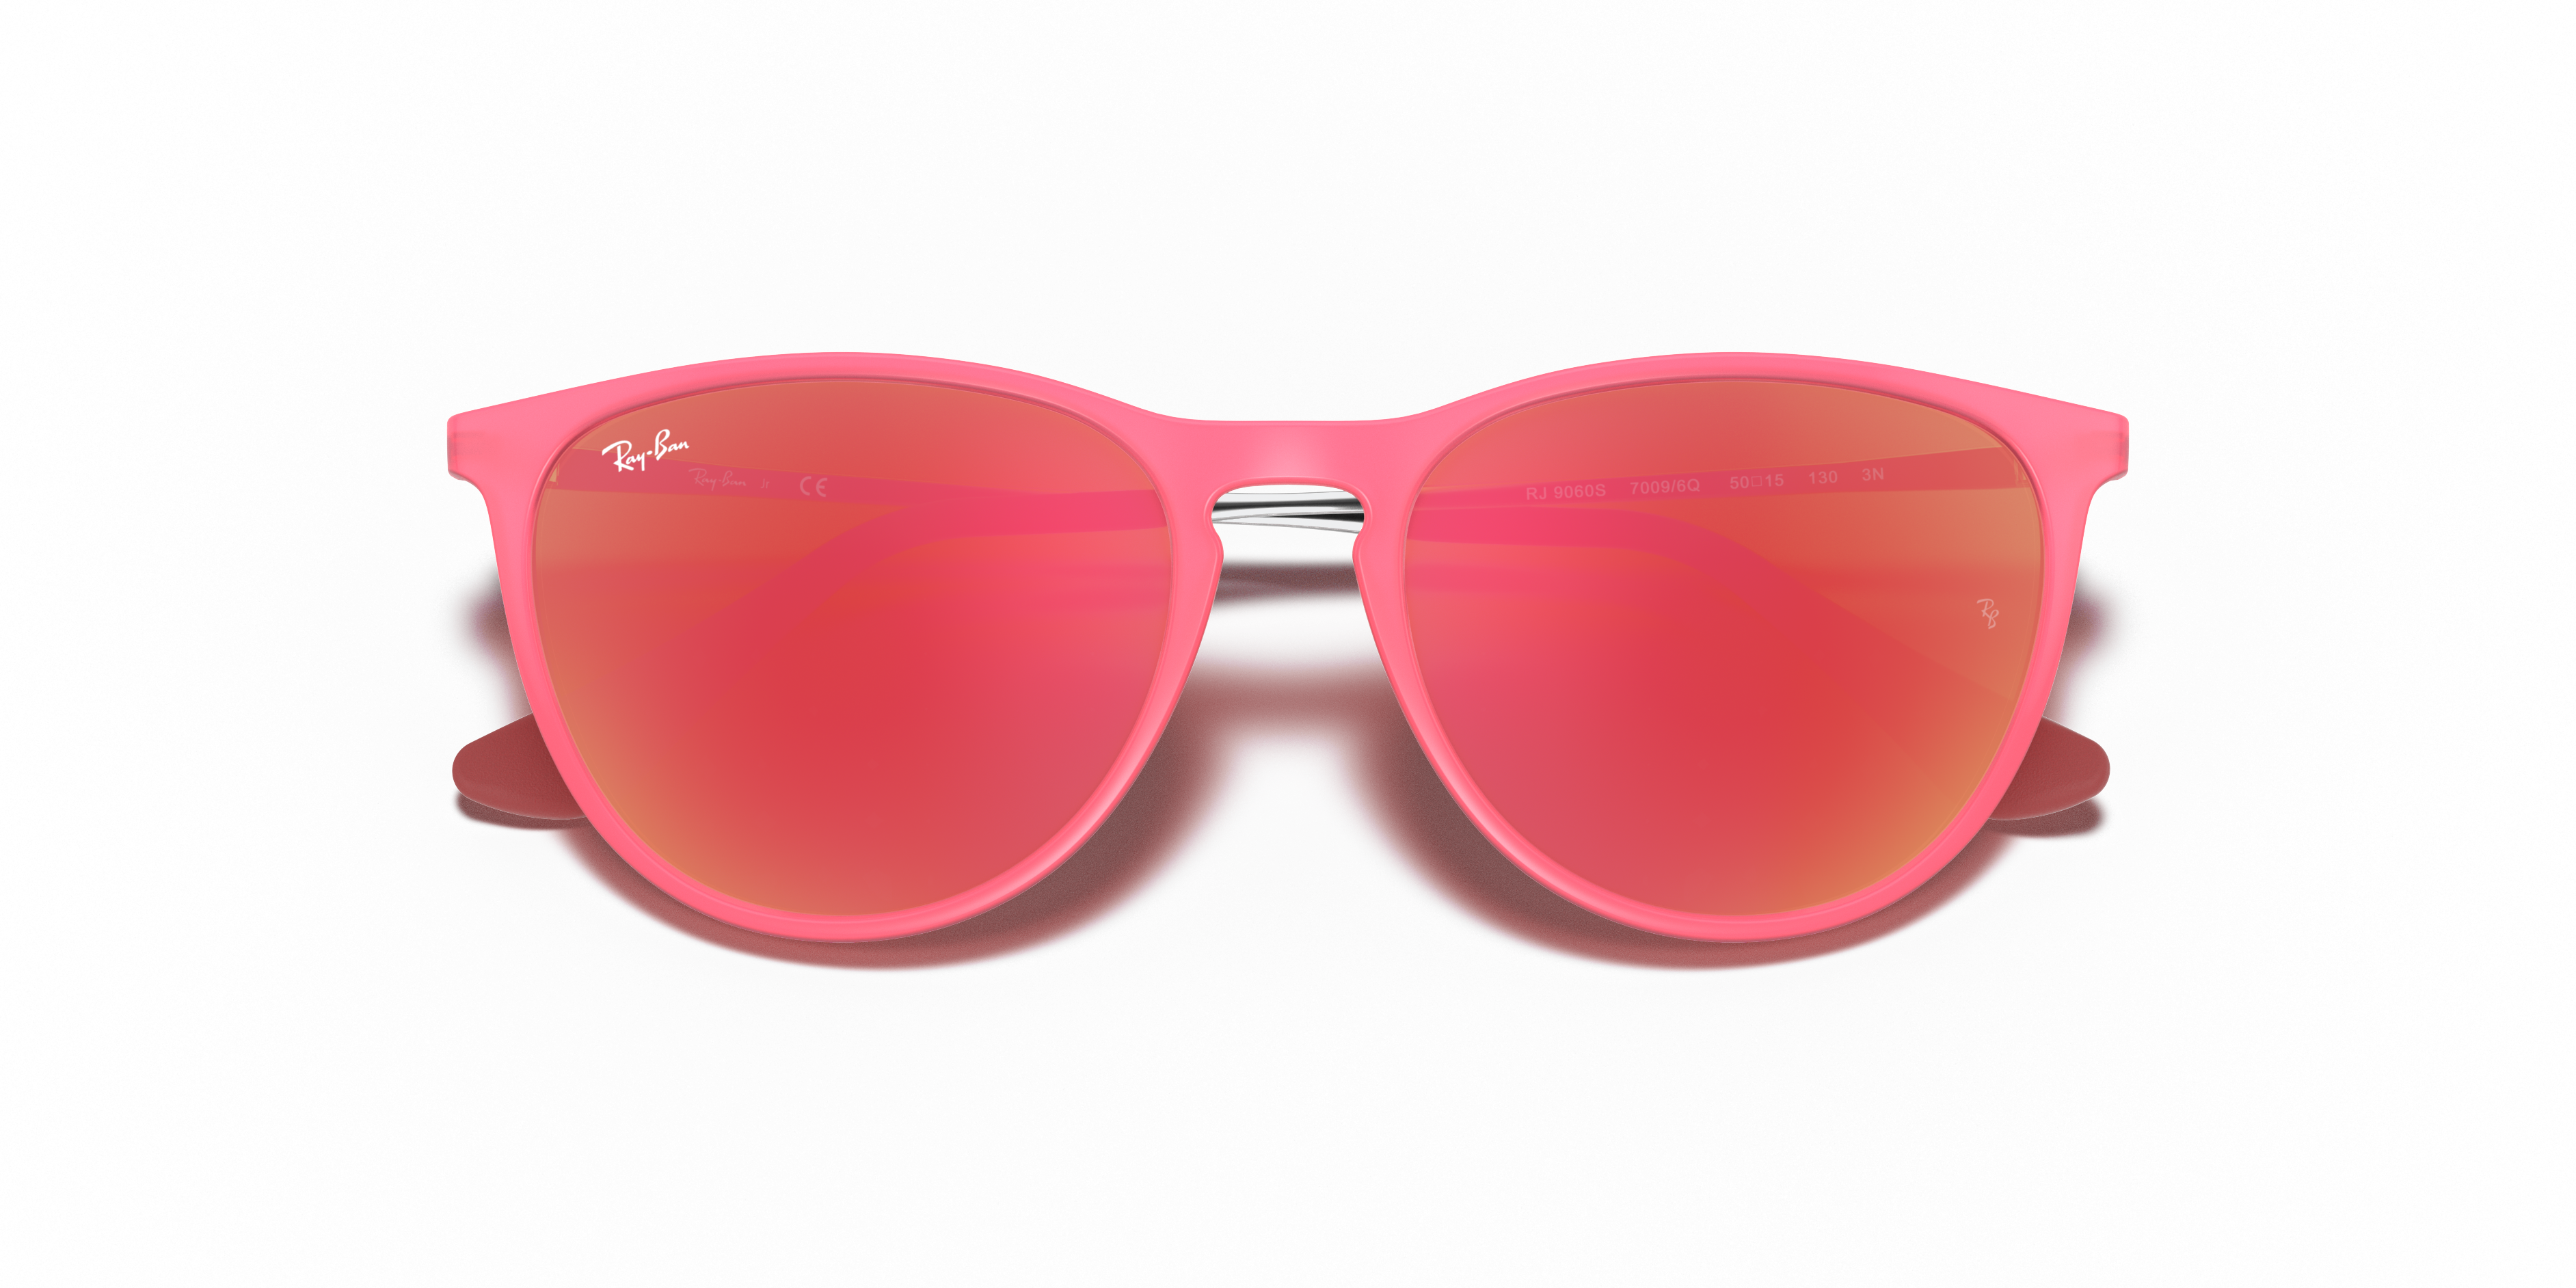 Ray Ban Junior RJ9065S Sunglasses Review | SmartBuyGlasses - YouTube